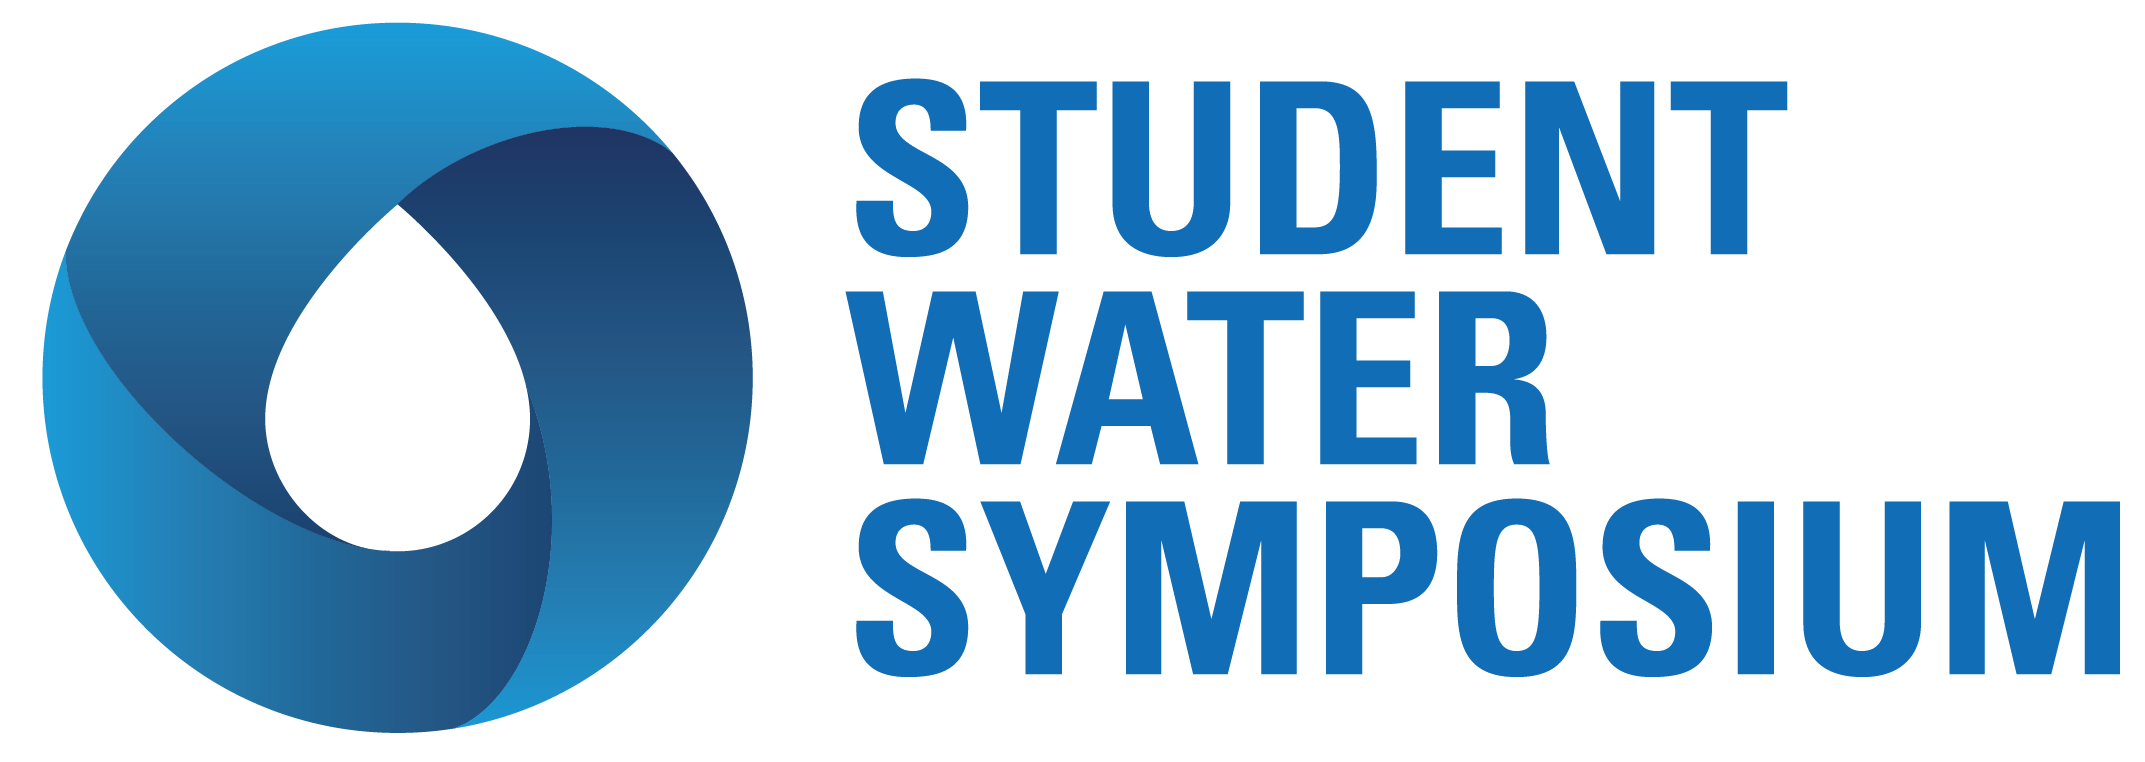 Student Water Symposium